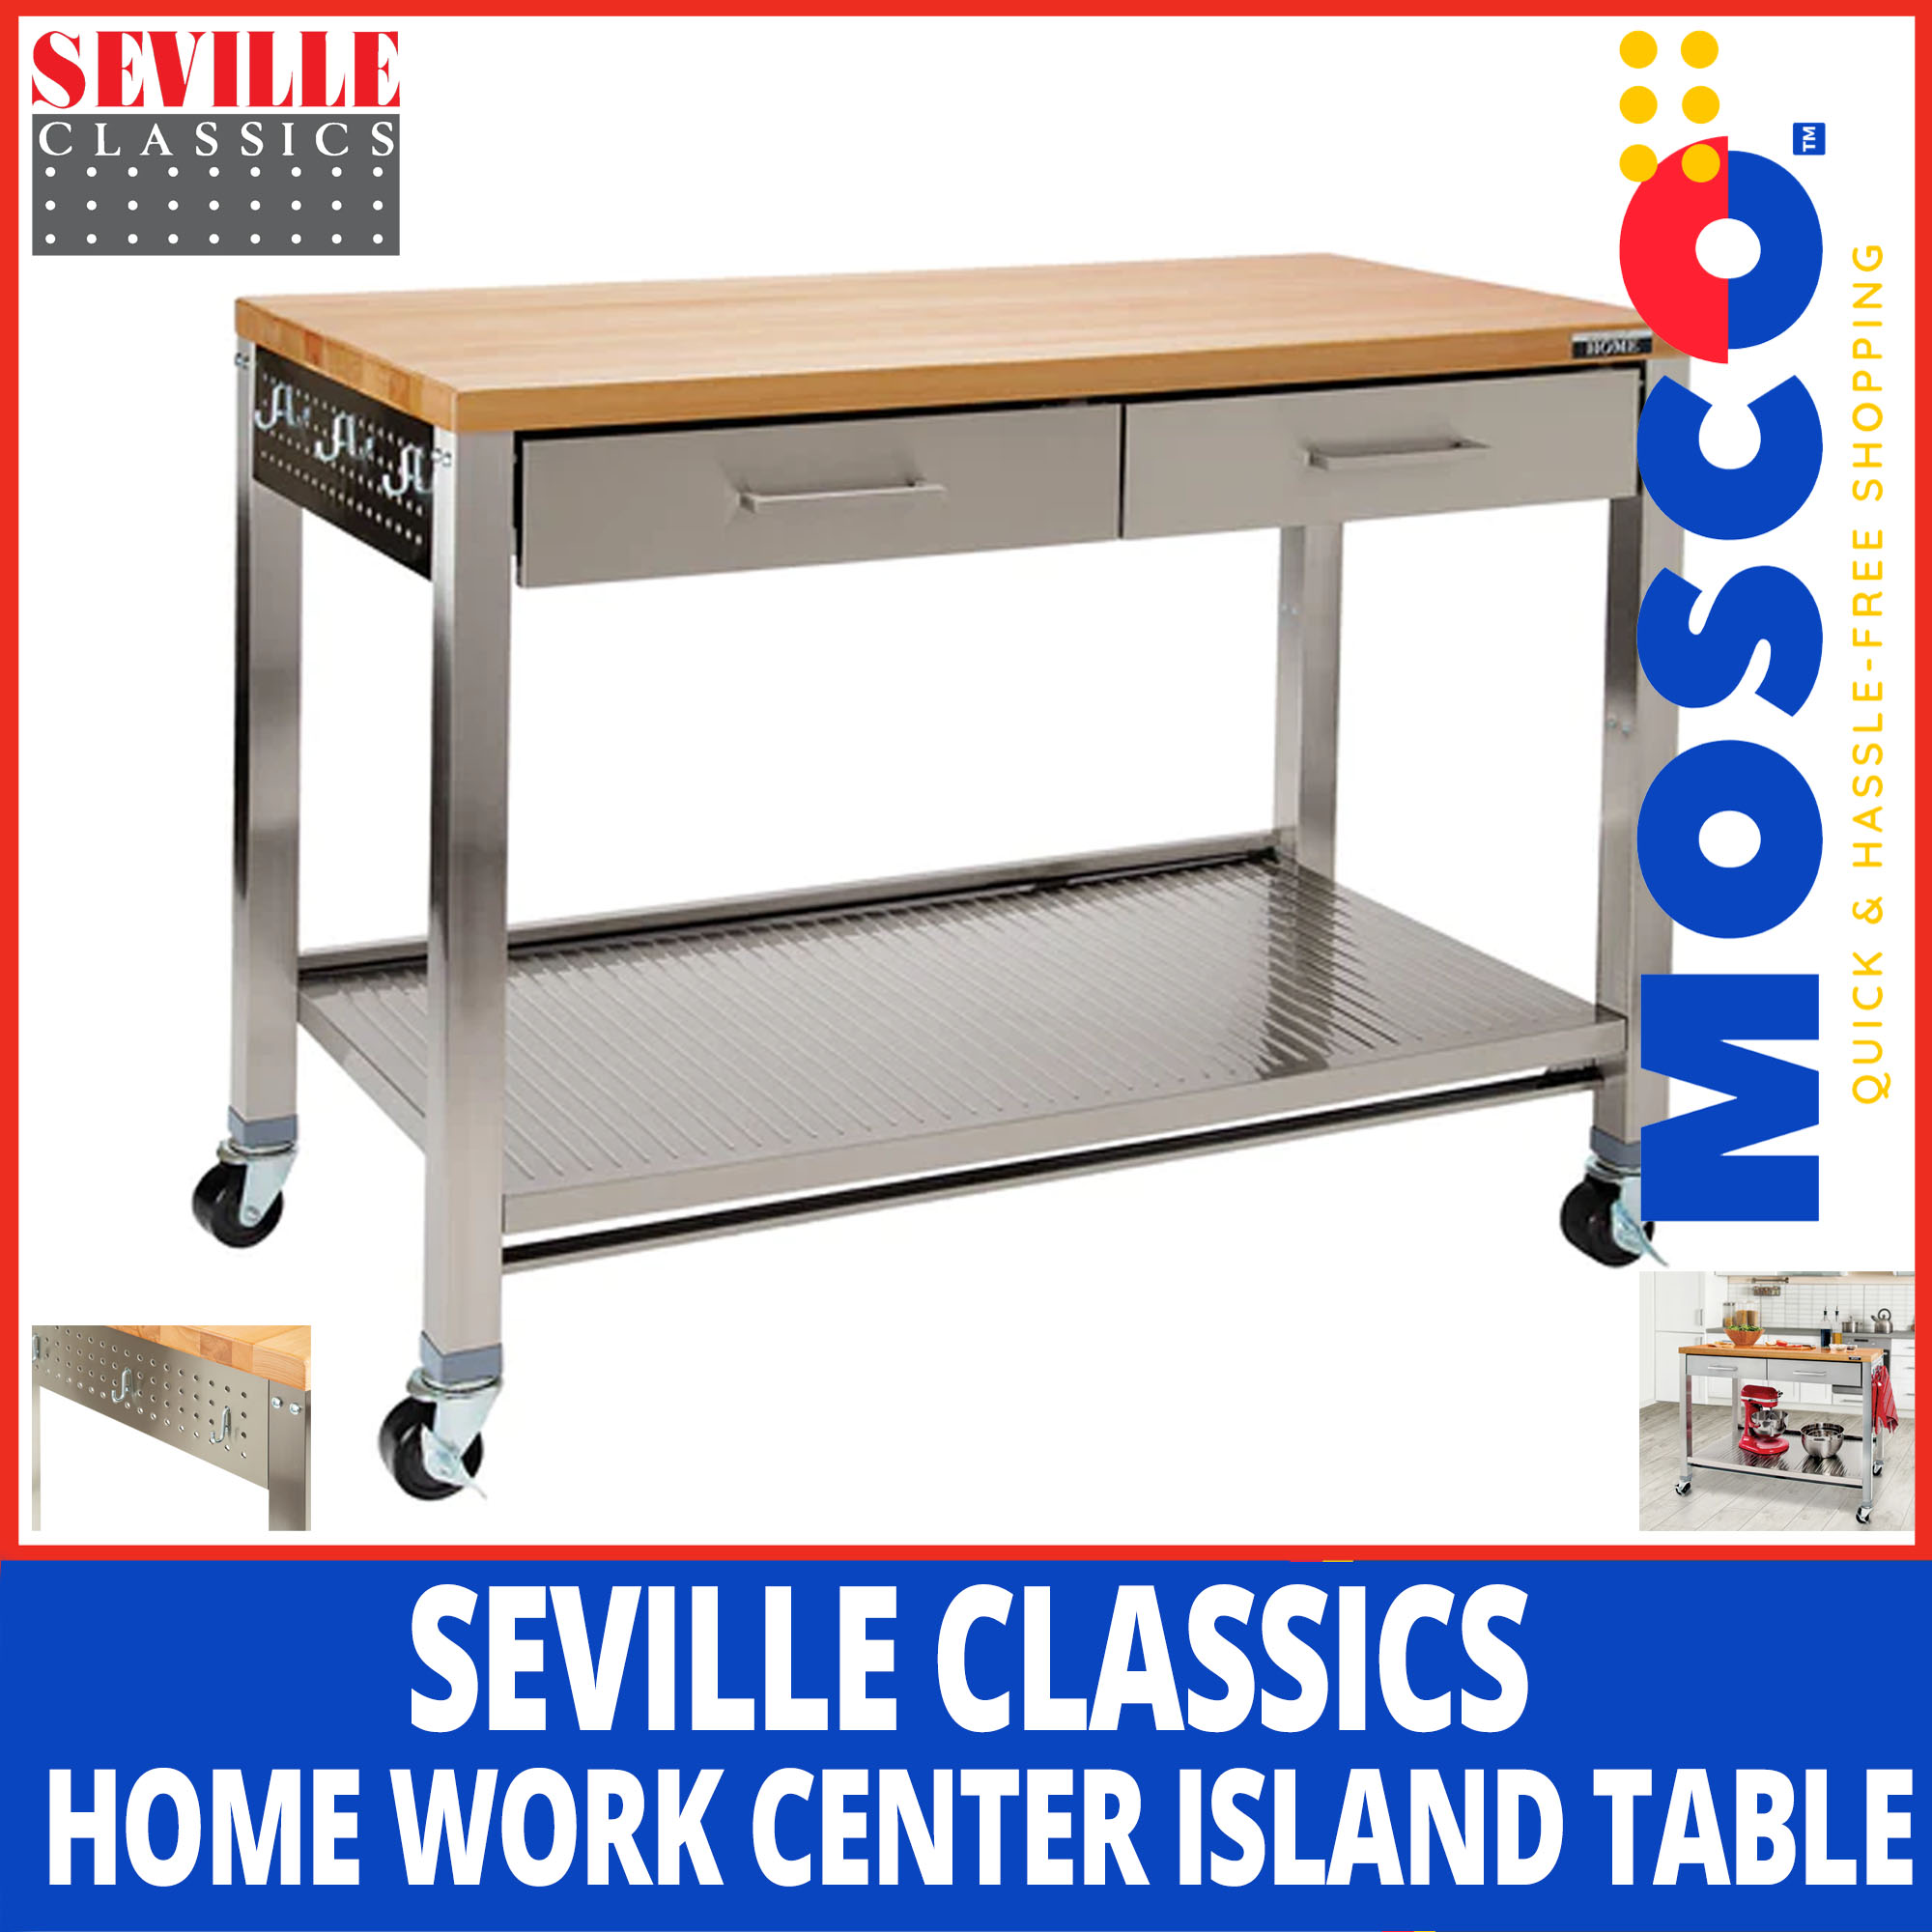 Seville Classics Nsf Steel Worktable